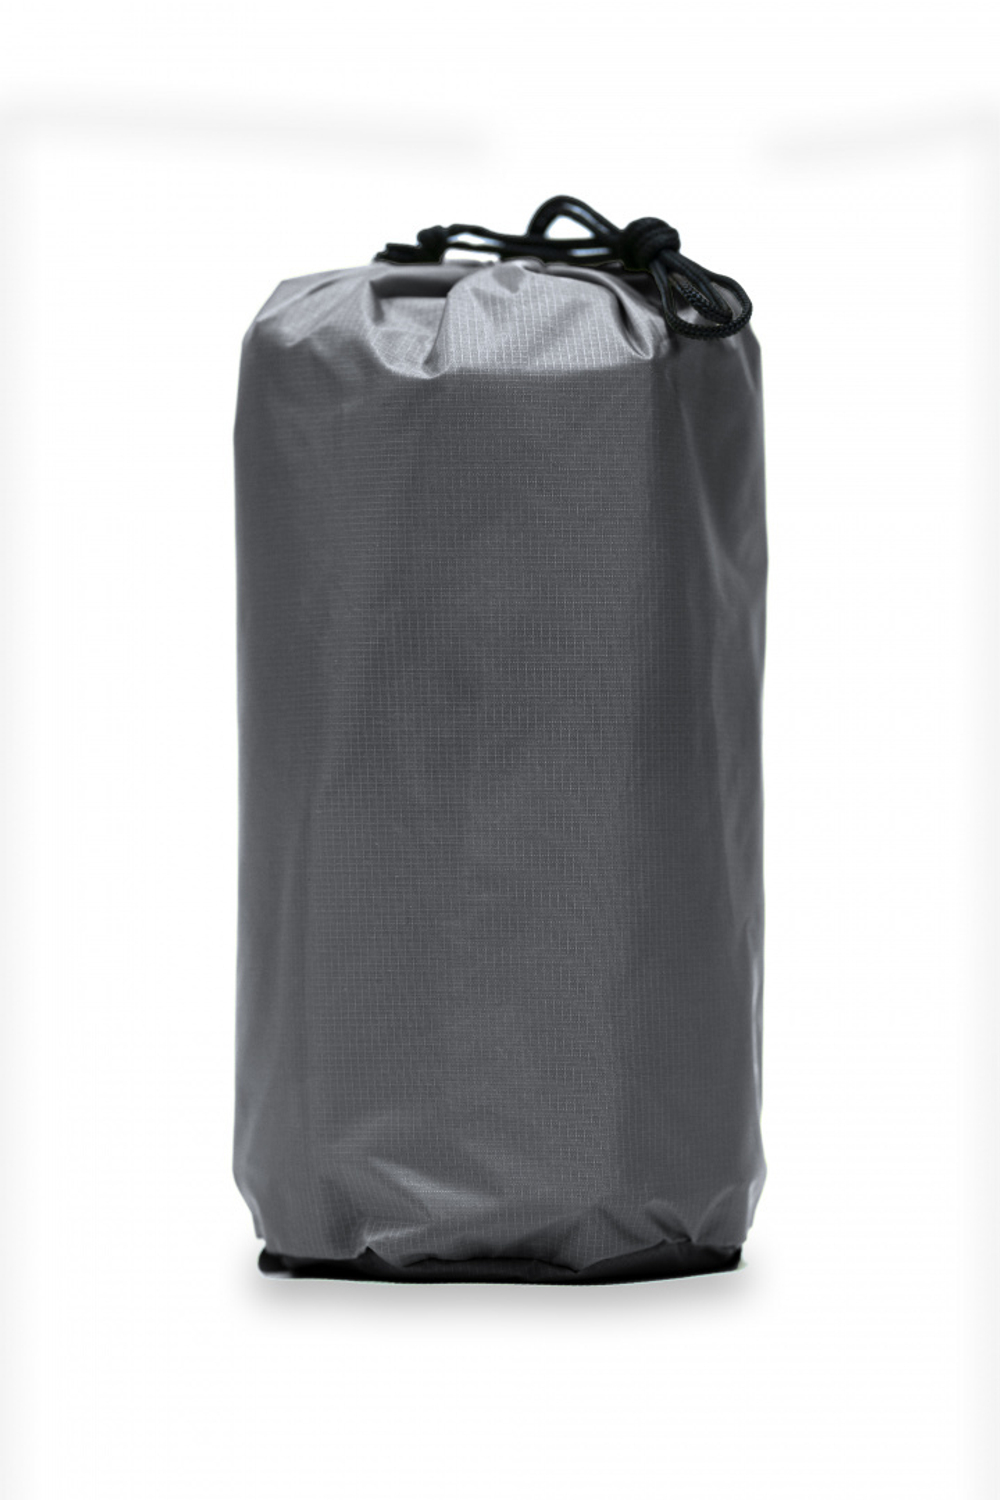 AIR GREY MAT коврик надувной (192х58х5,серый)